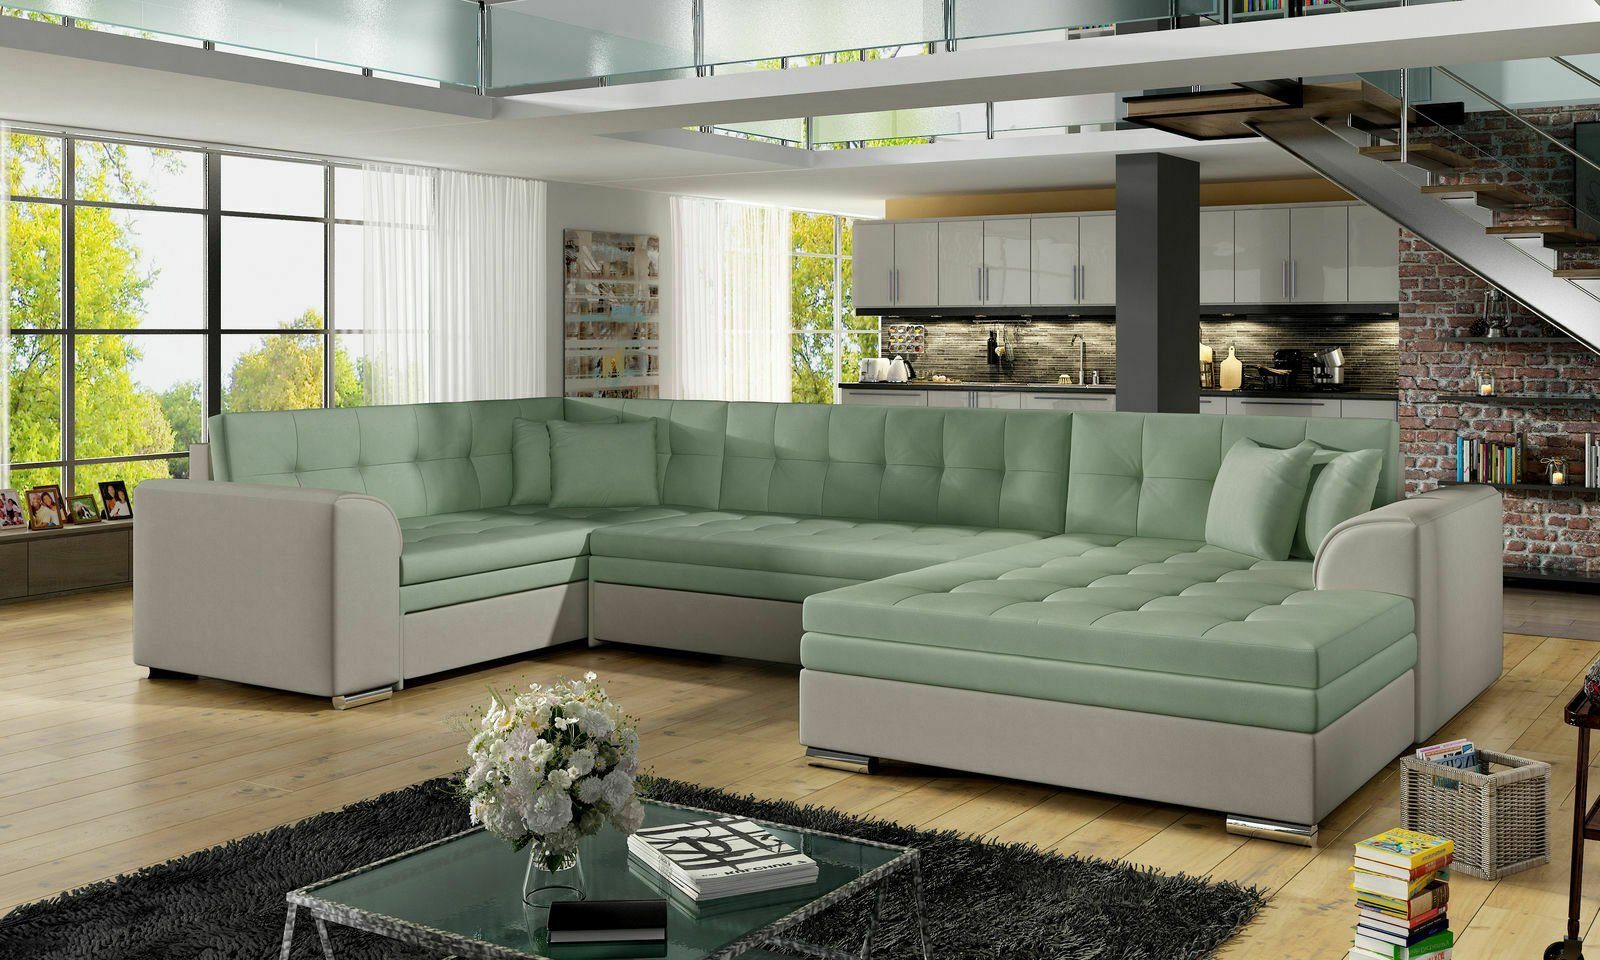 Bettfunktion Ecksofa JVmoebel Couch Mit Bettfunktion Textil Design Polster, Grün/Grau Ecksofa Schlafsofa Leder